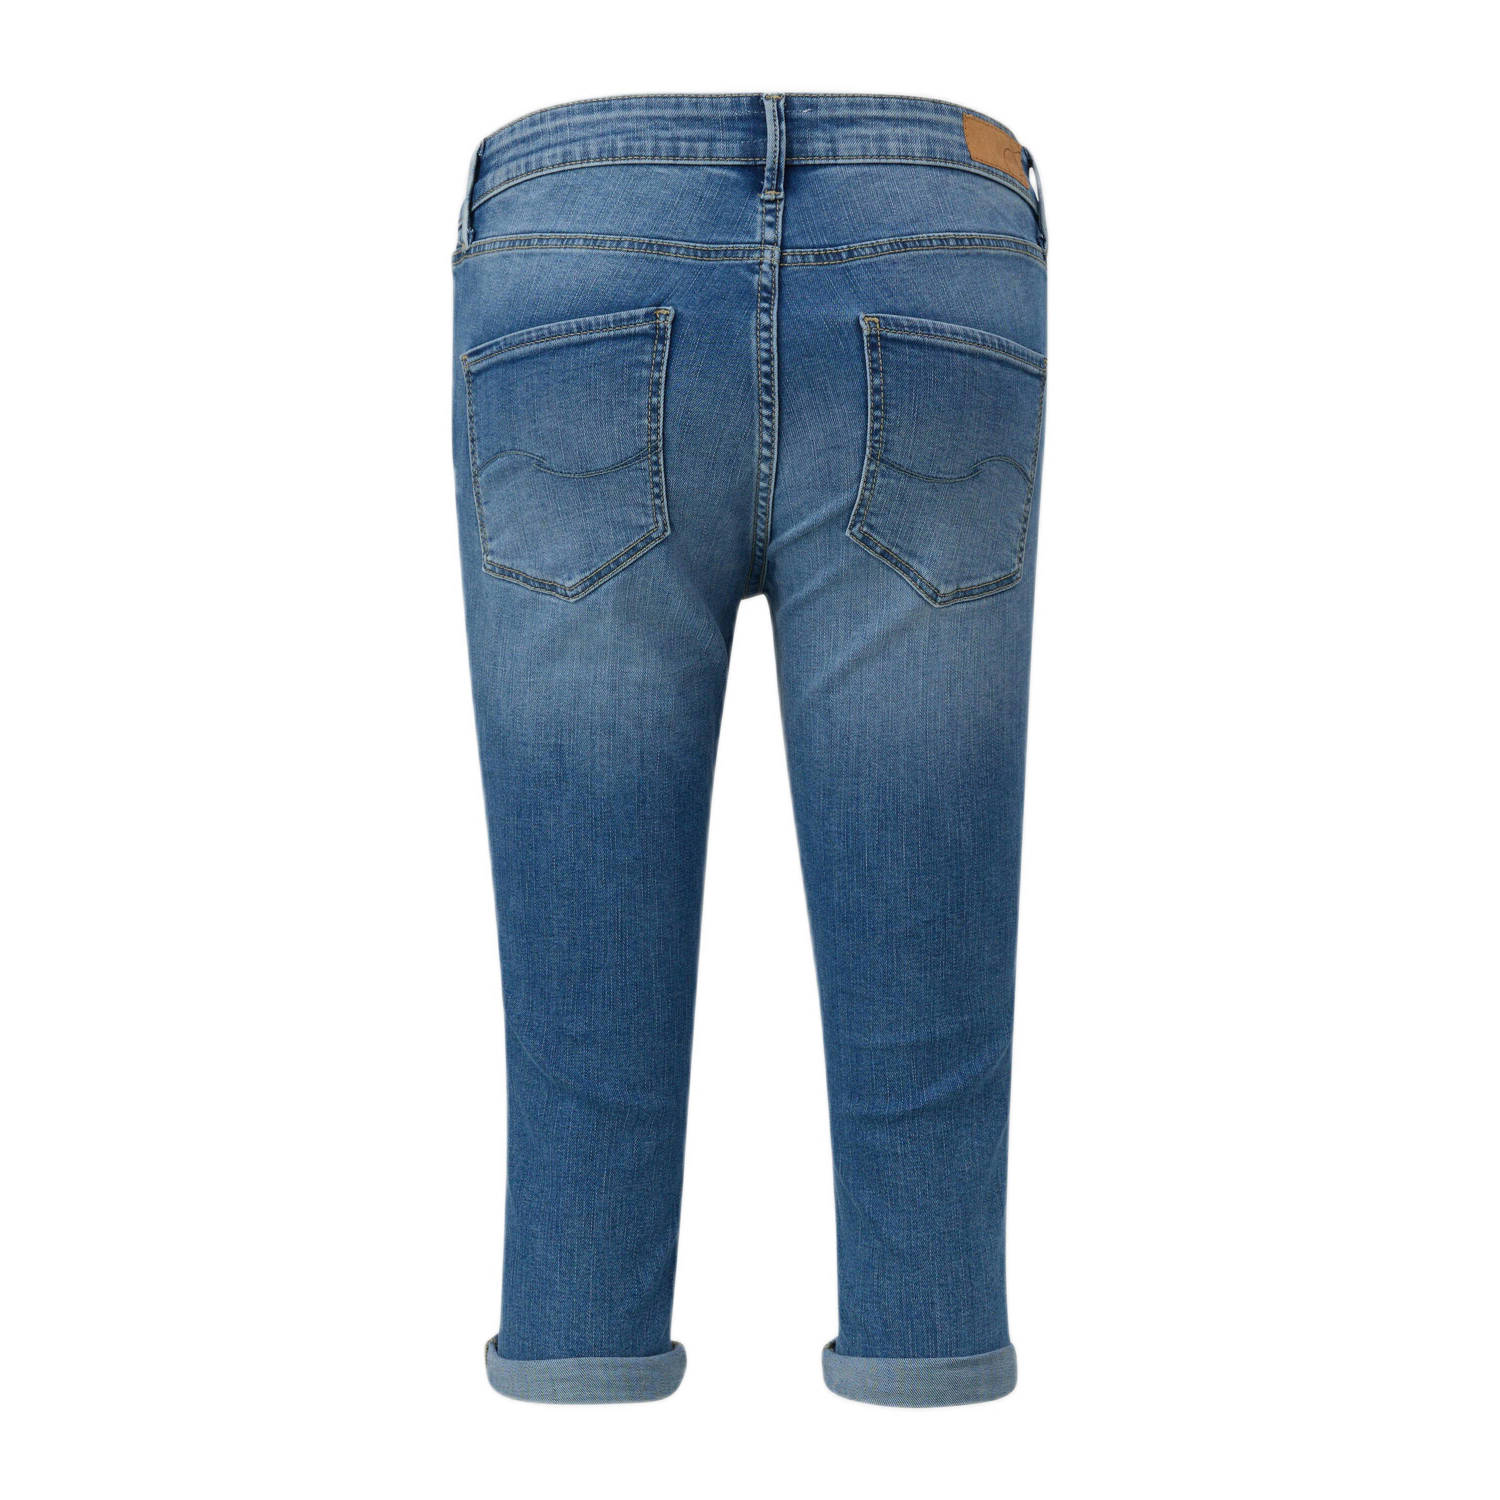 Q S by s.Oliver capri jeans light blue